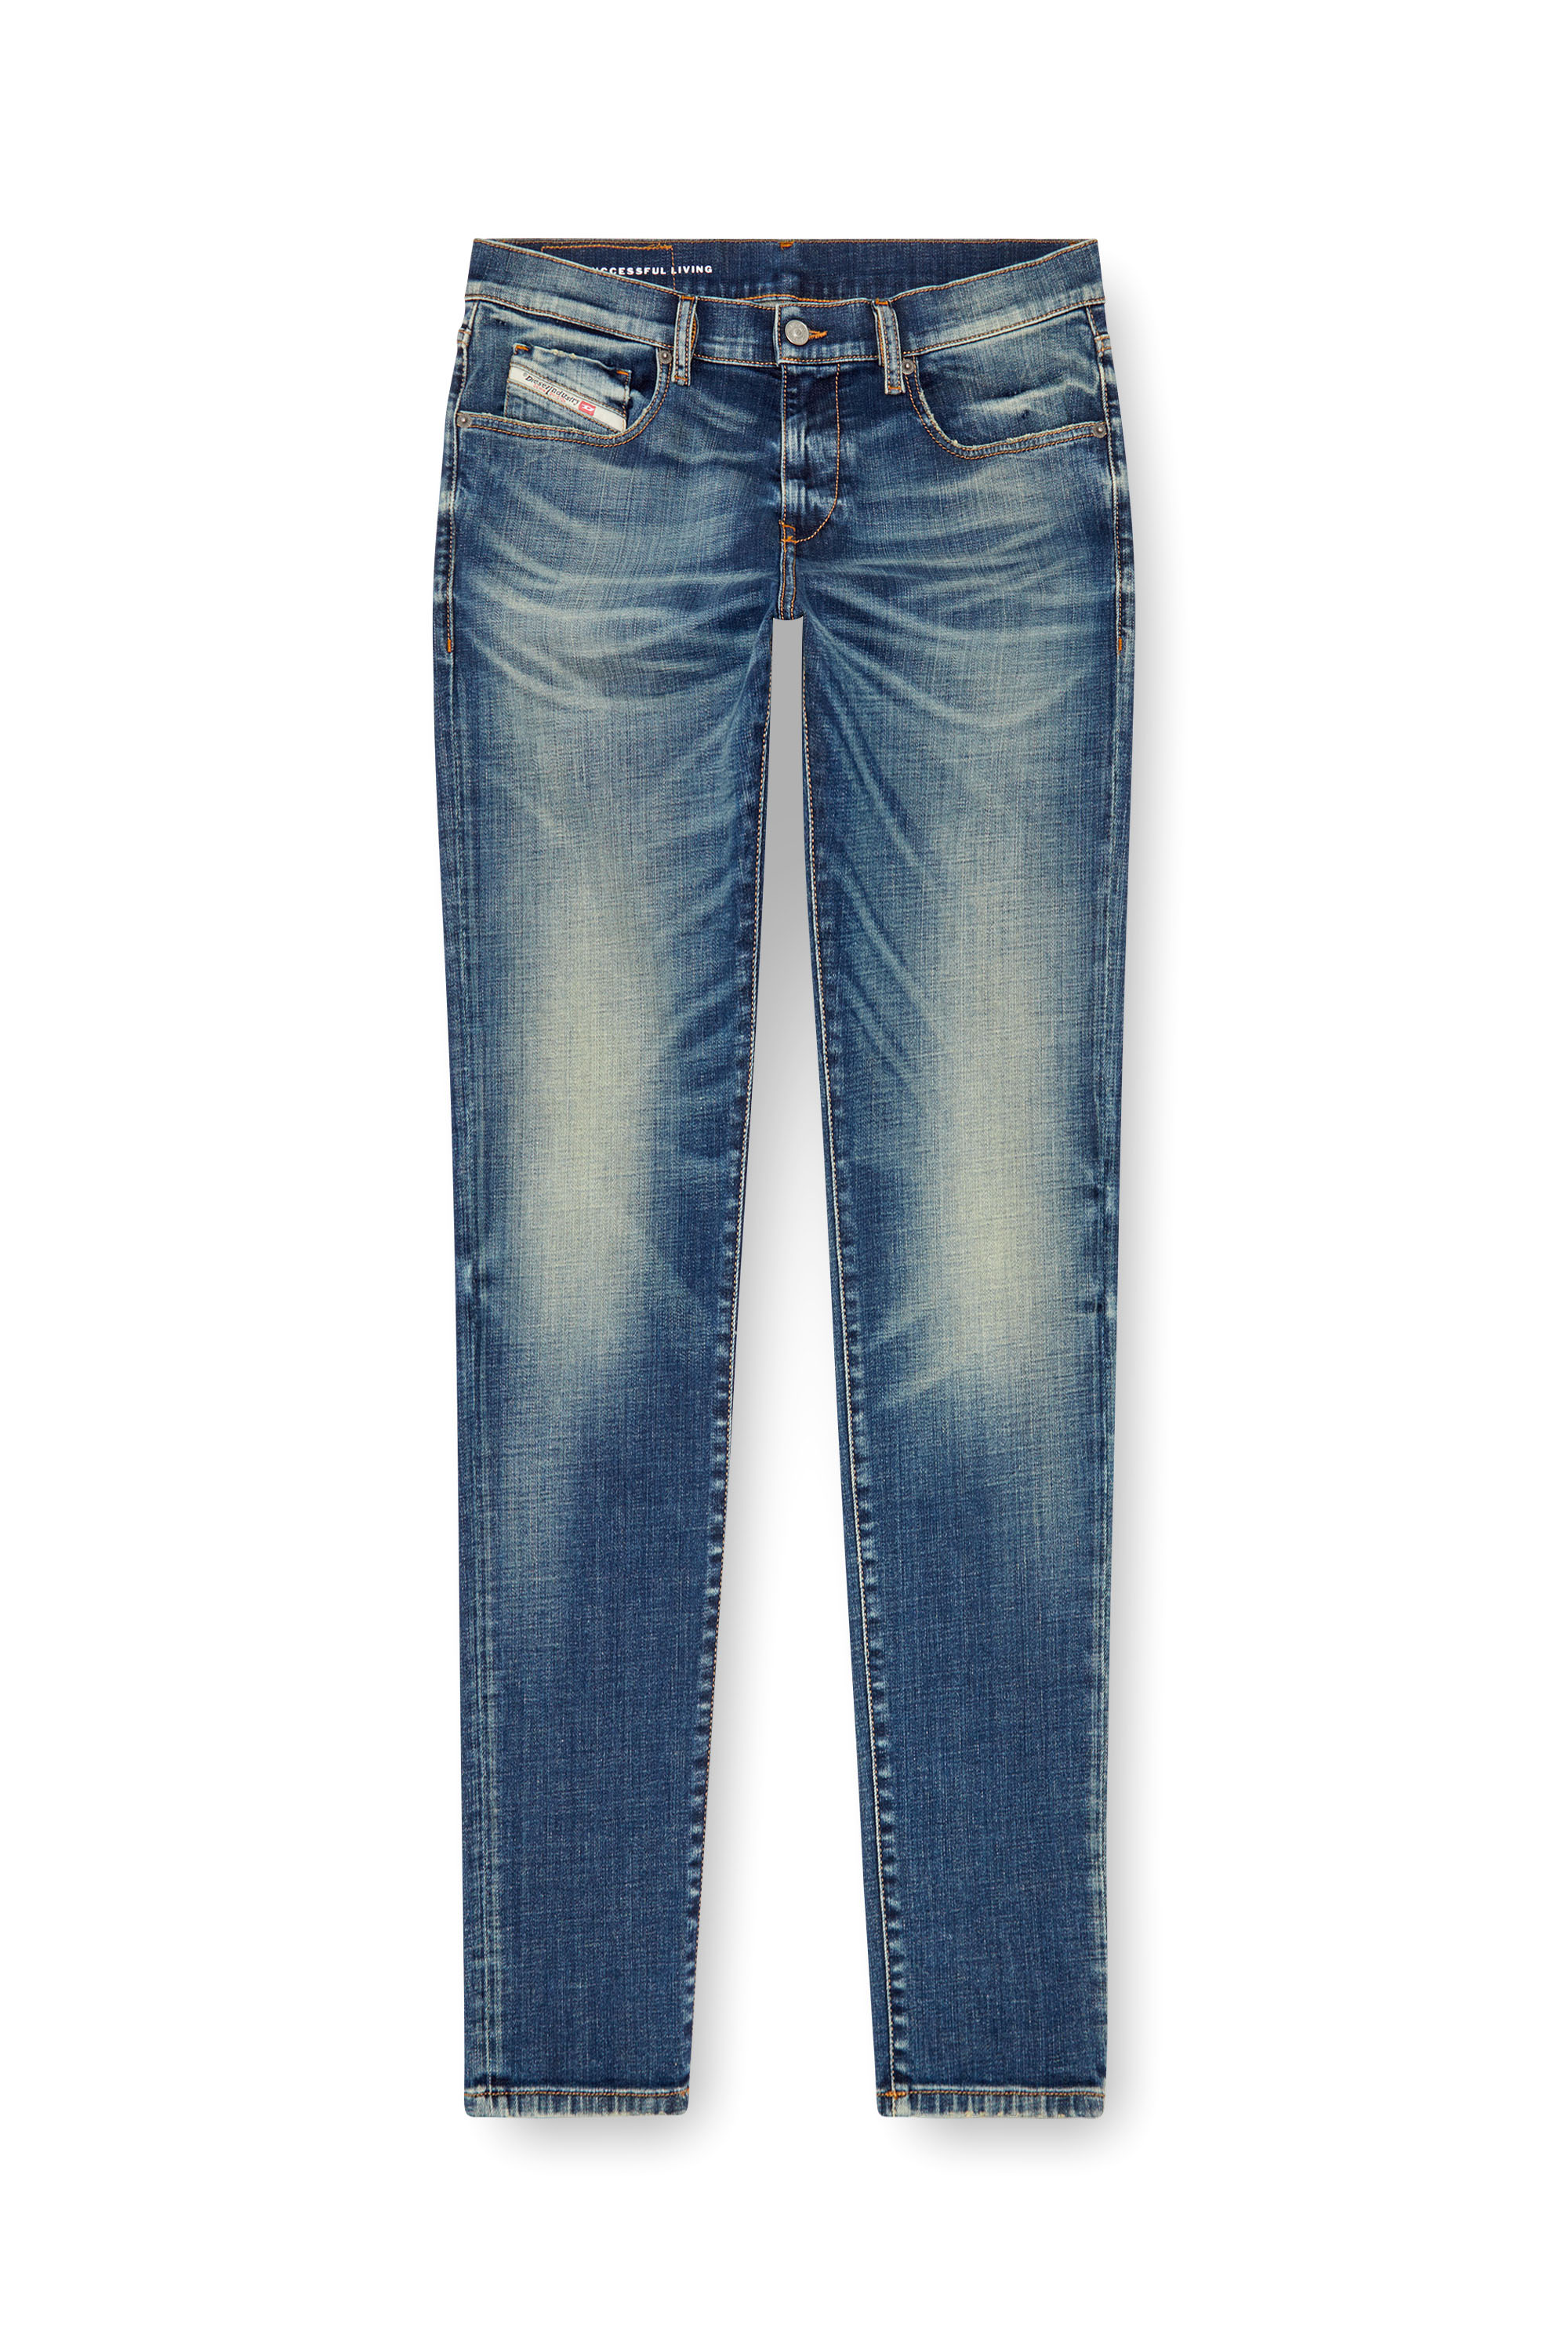 Diesel - Slim Jeans 2019 D-Strukt 09J50, Hombre Slim Jeans - 2019 D-Strukt in Azul marino - Image 3